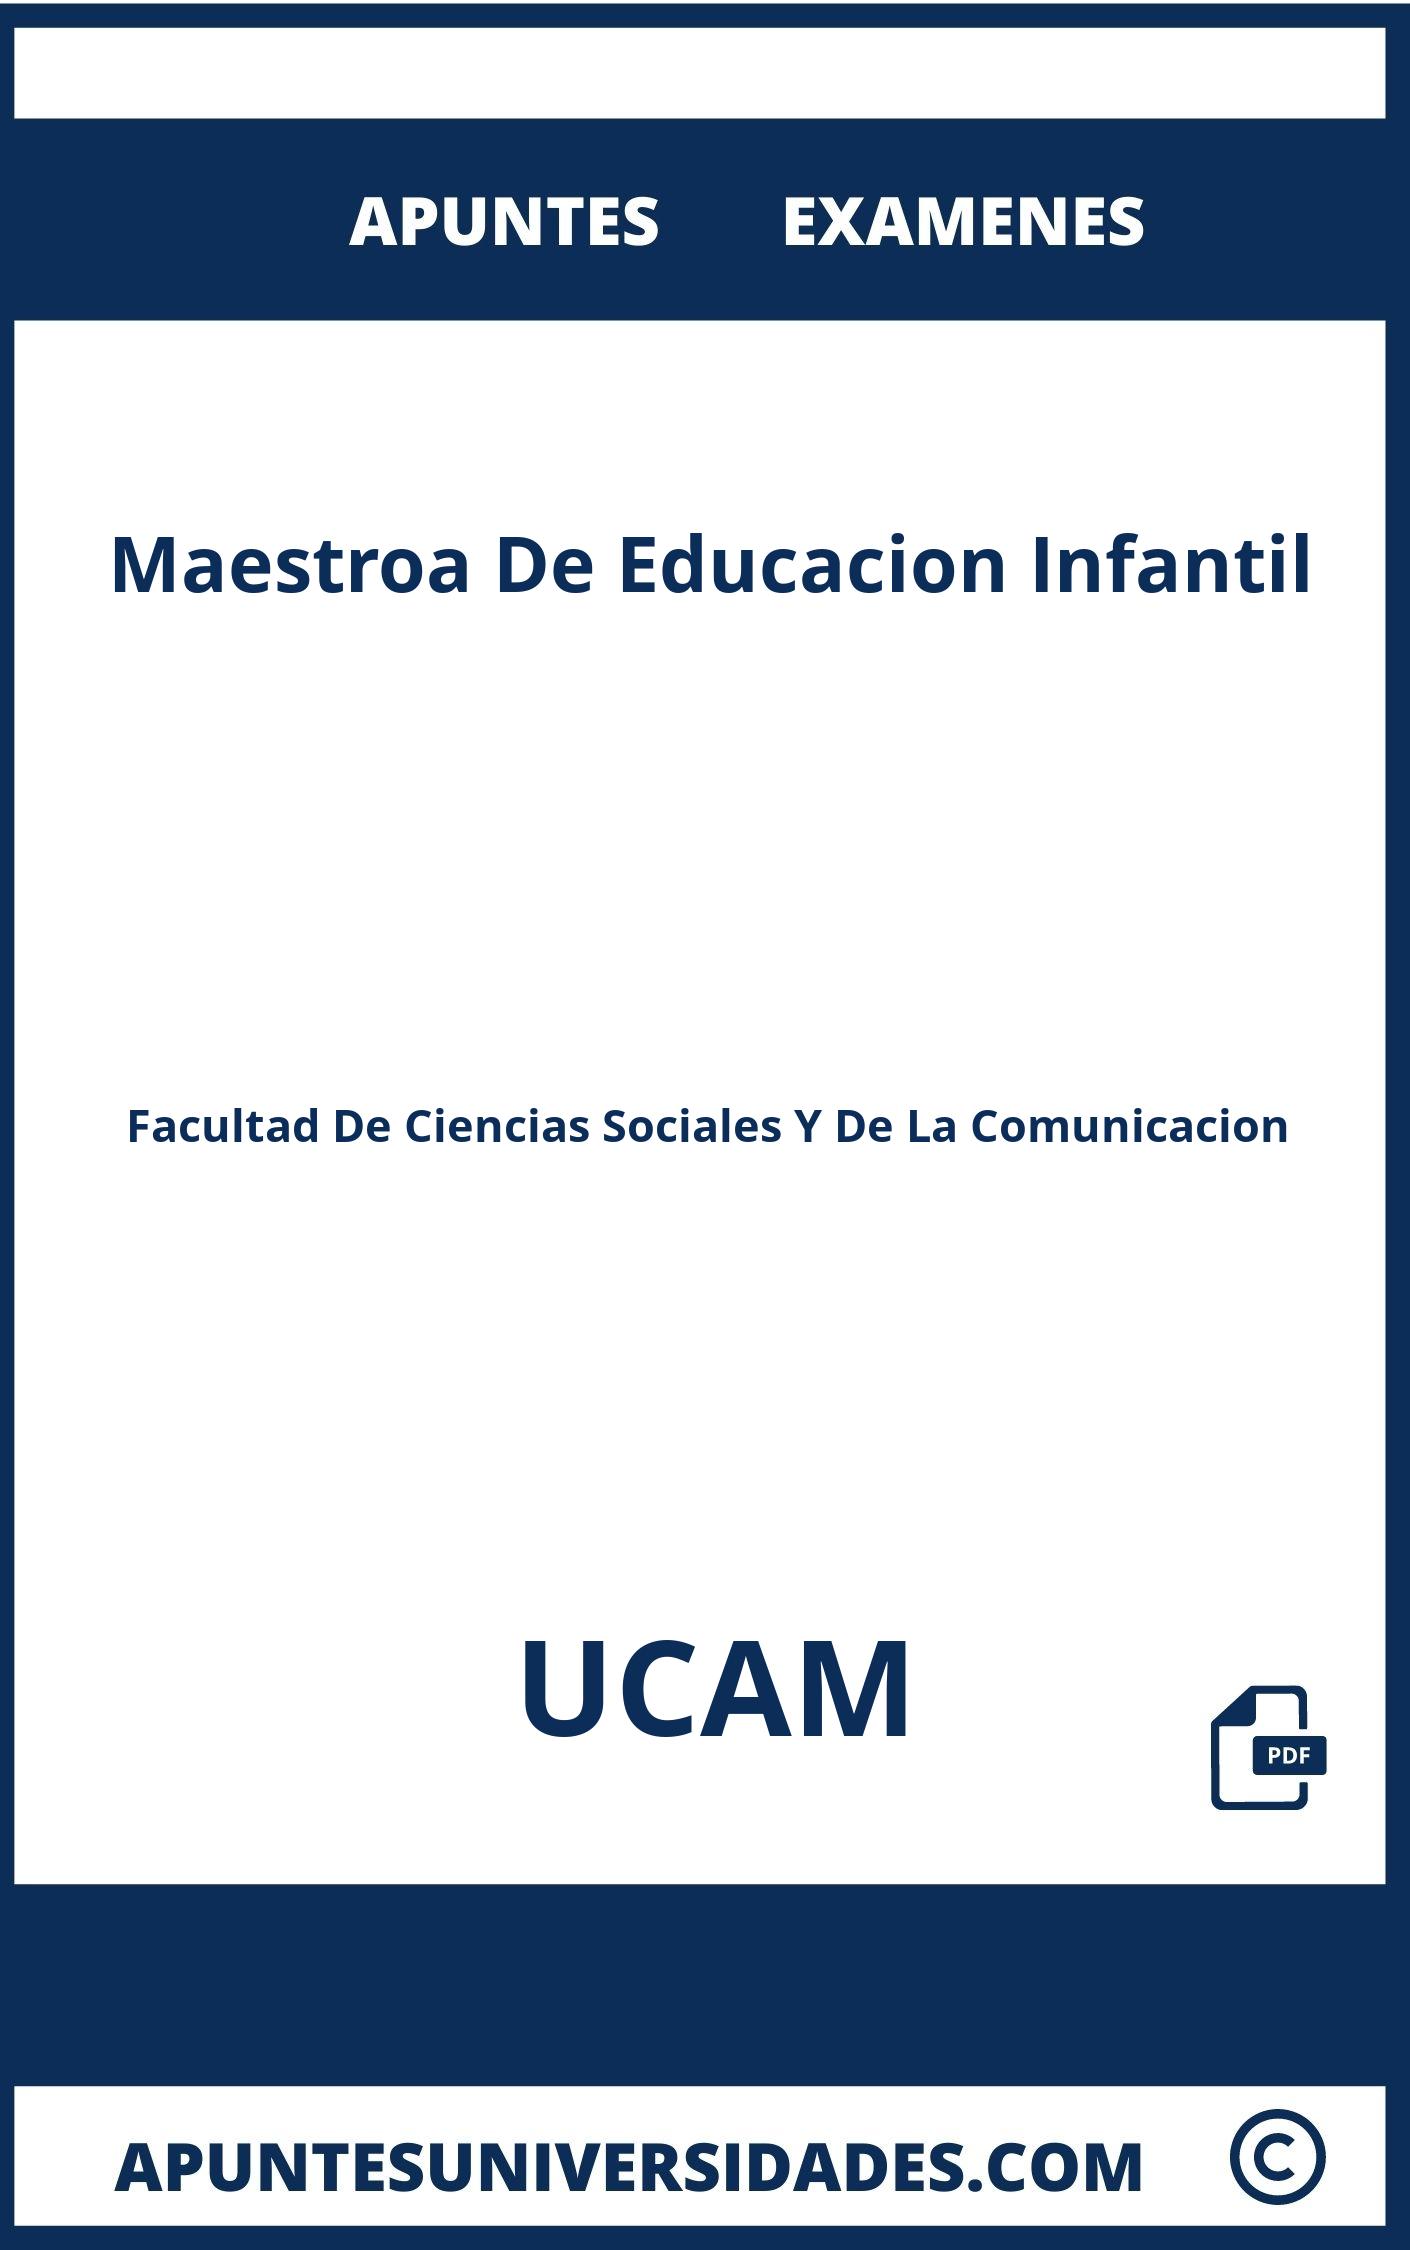 Apuntes Examenes Maestroa De Educacion Infantil UCAM